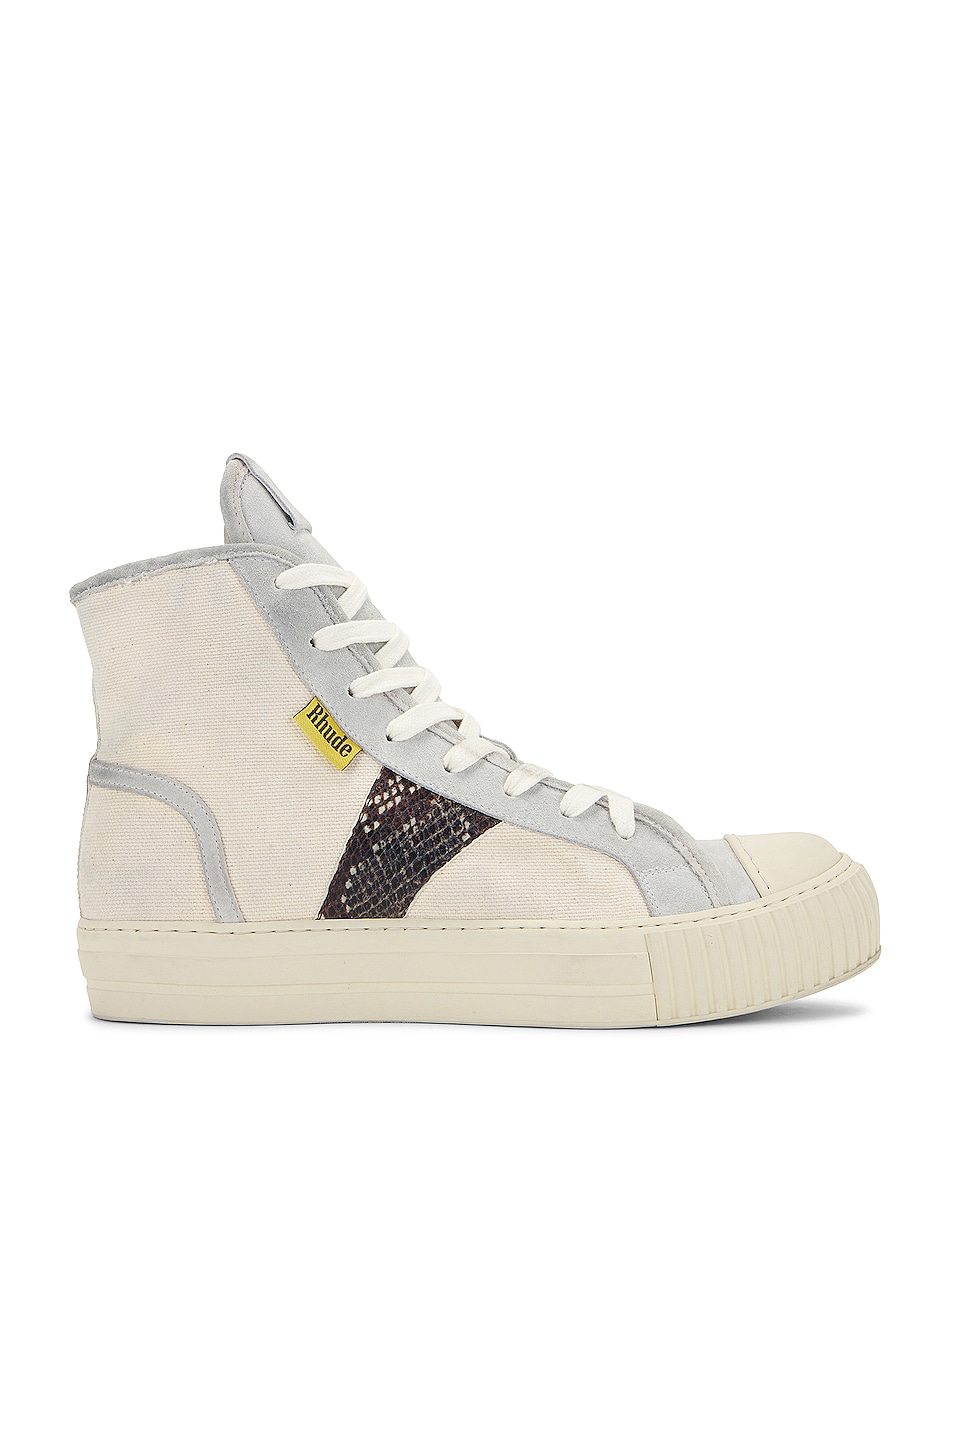 Image 1 of Rhude Bel Airs Sneaker in White, Beige & Snake